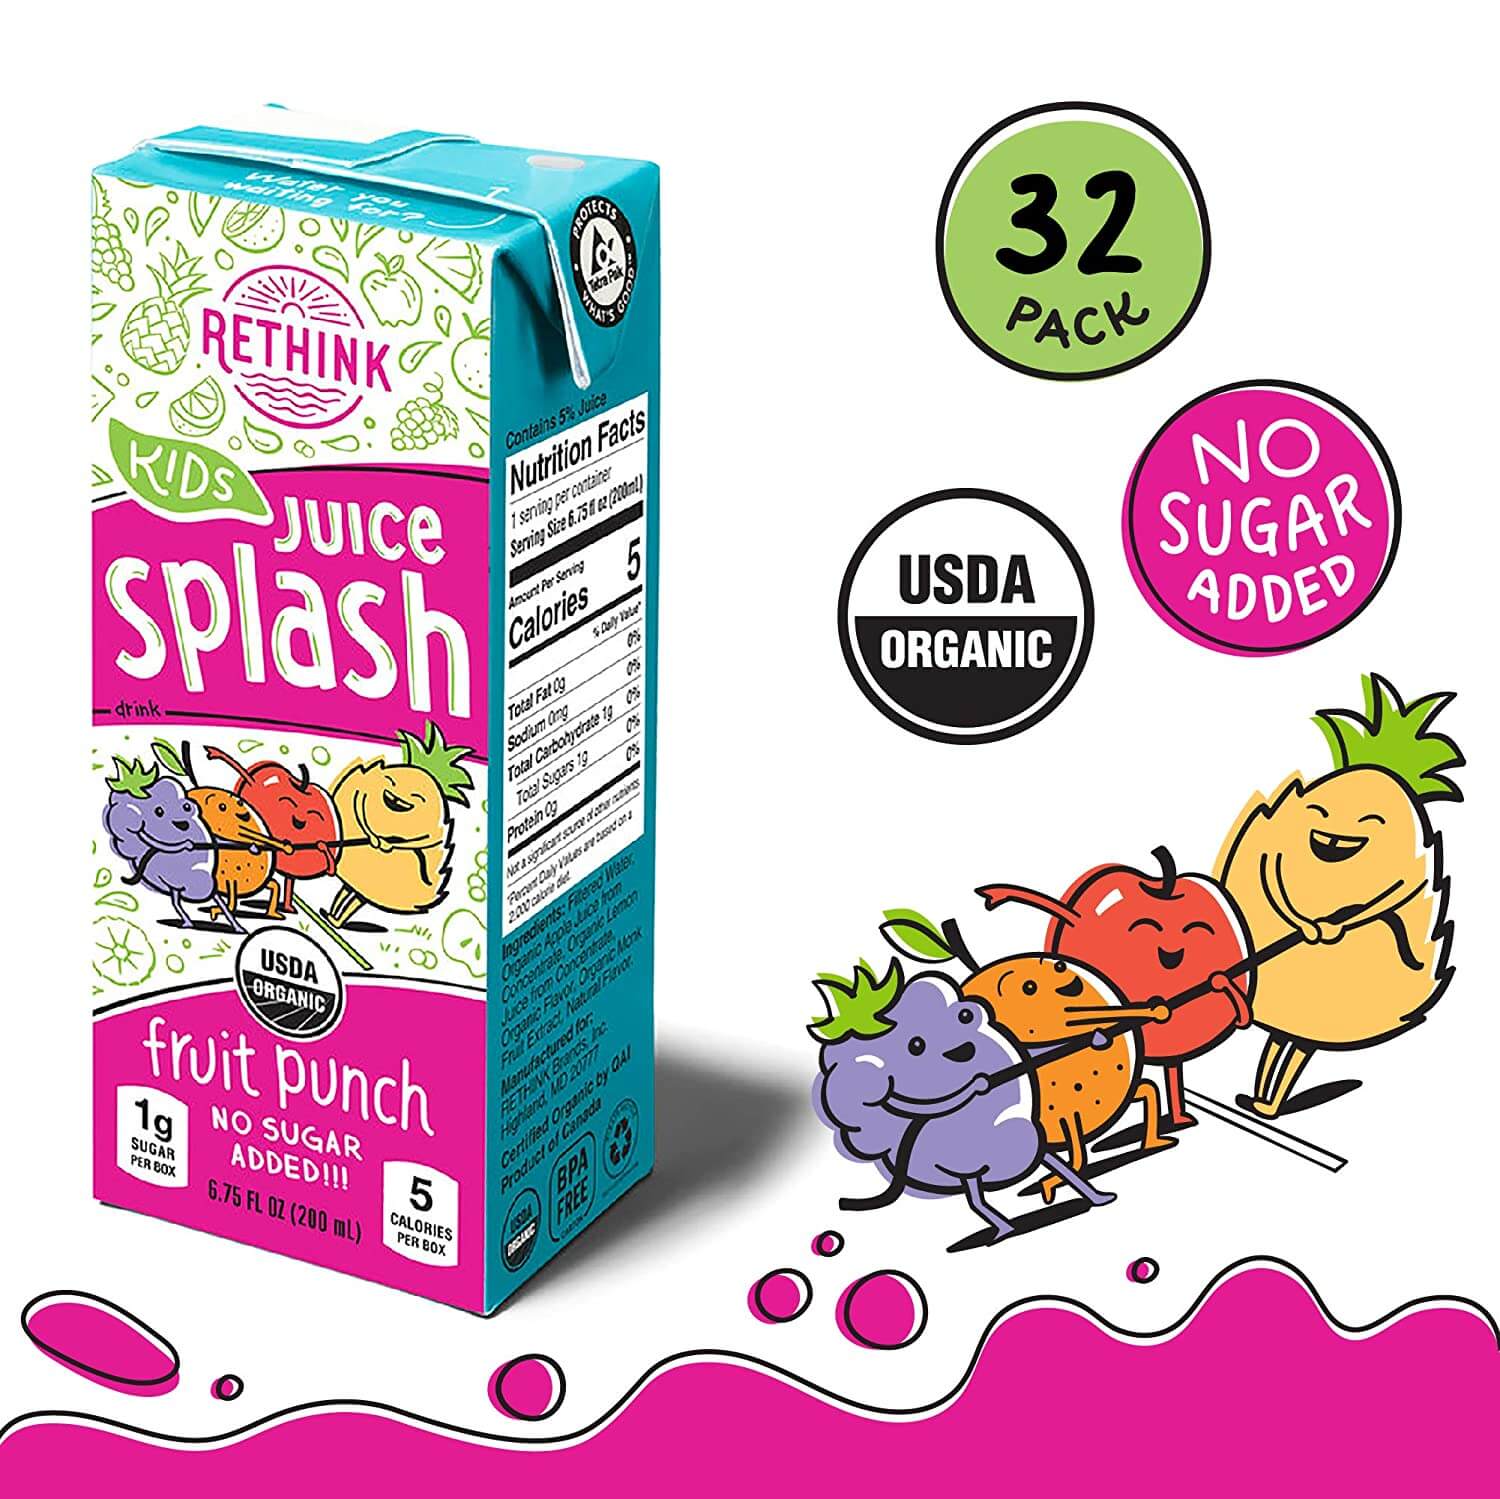 Rethink Kids Juice Splash Fruit Punch Low Sugar Kids Juice Drink